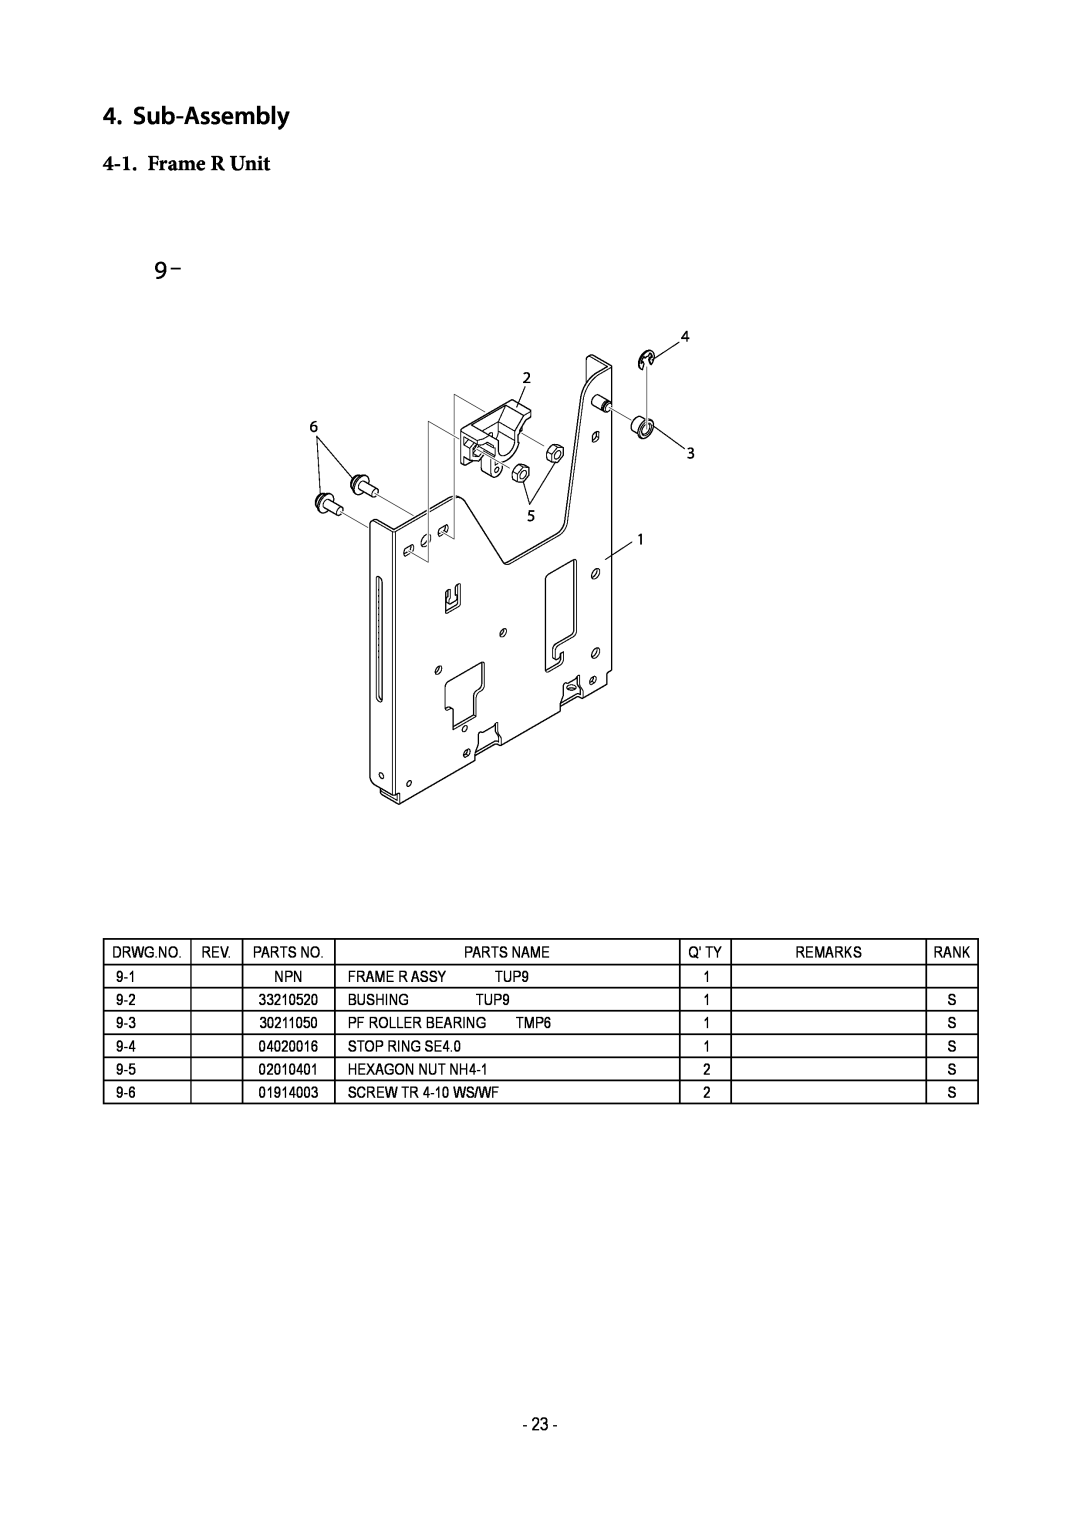 Star Micronics TUP500 technical manual Sub-Assembly, Frame R Unit 